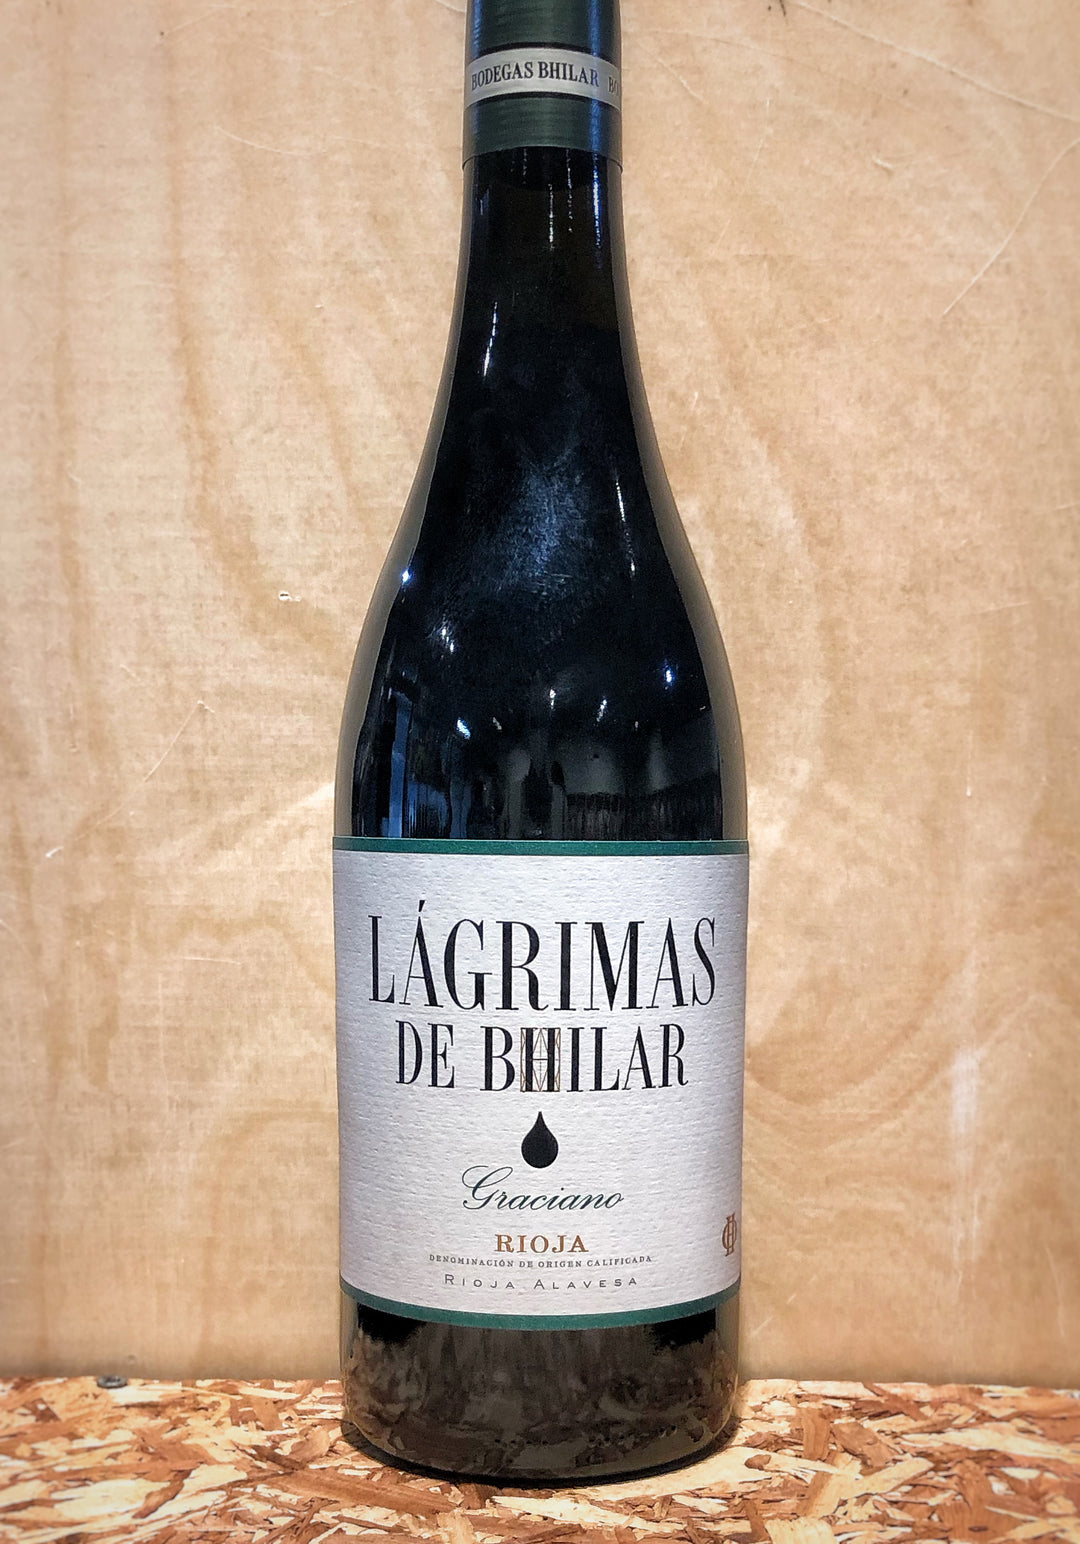 Bodegas Bhilar 'Lágrimas de Bhilar' Graciano 2020 (Rioja, Spain)